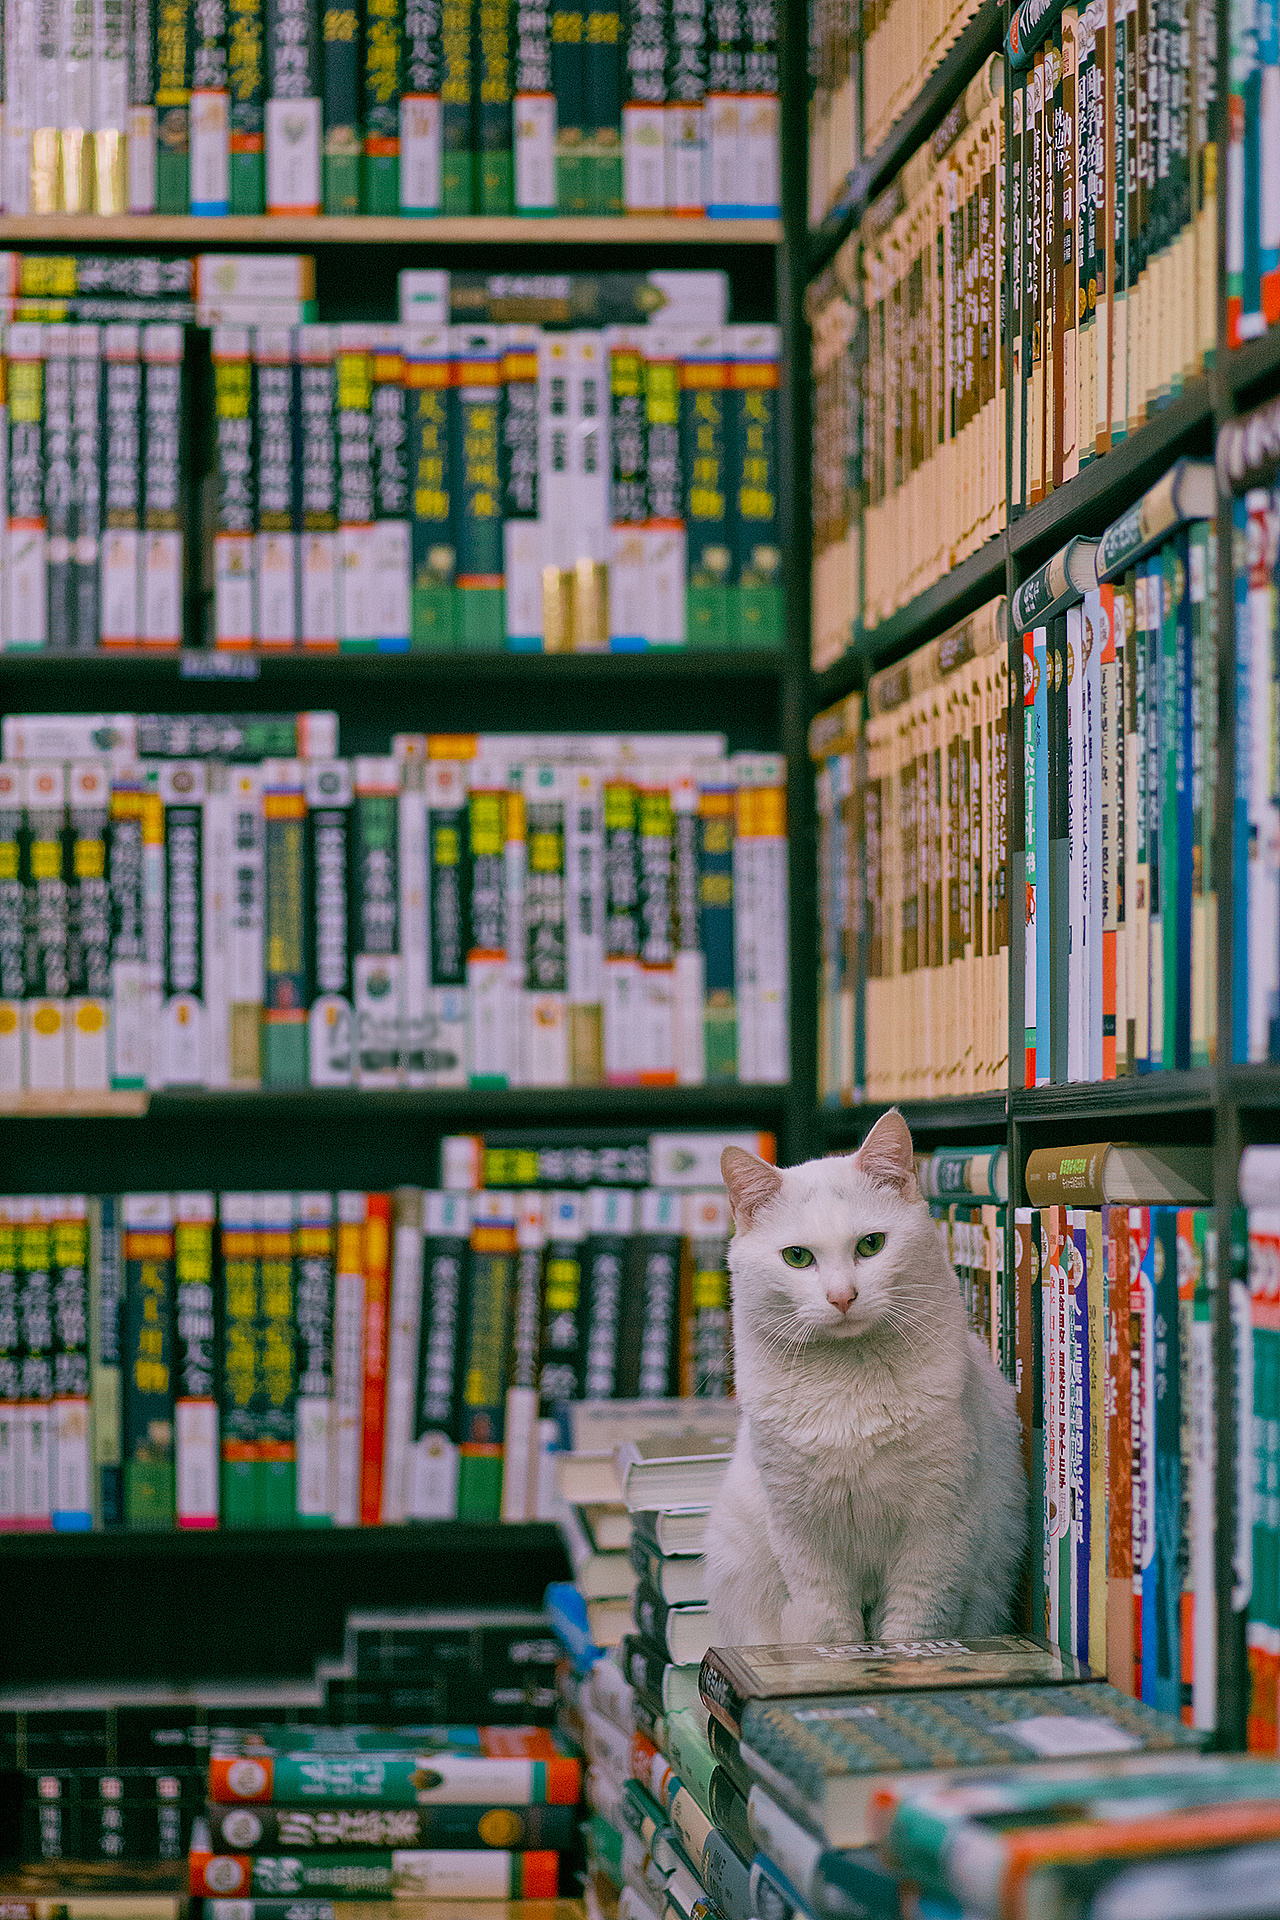 General 1280x1920 cats photography bookstore books bookshelves feline mammals animals indoors portrait display